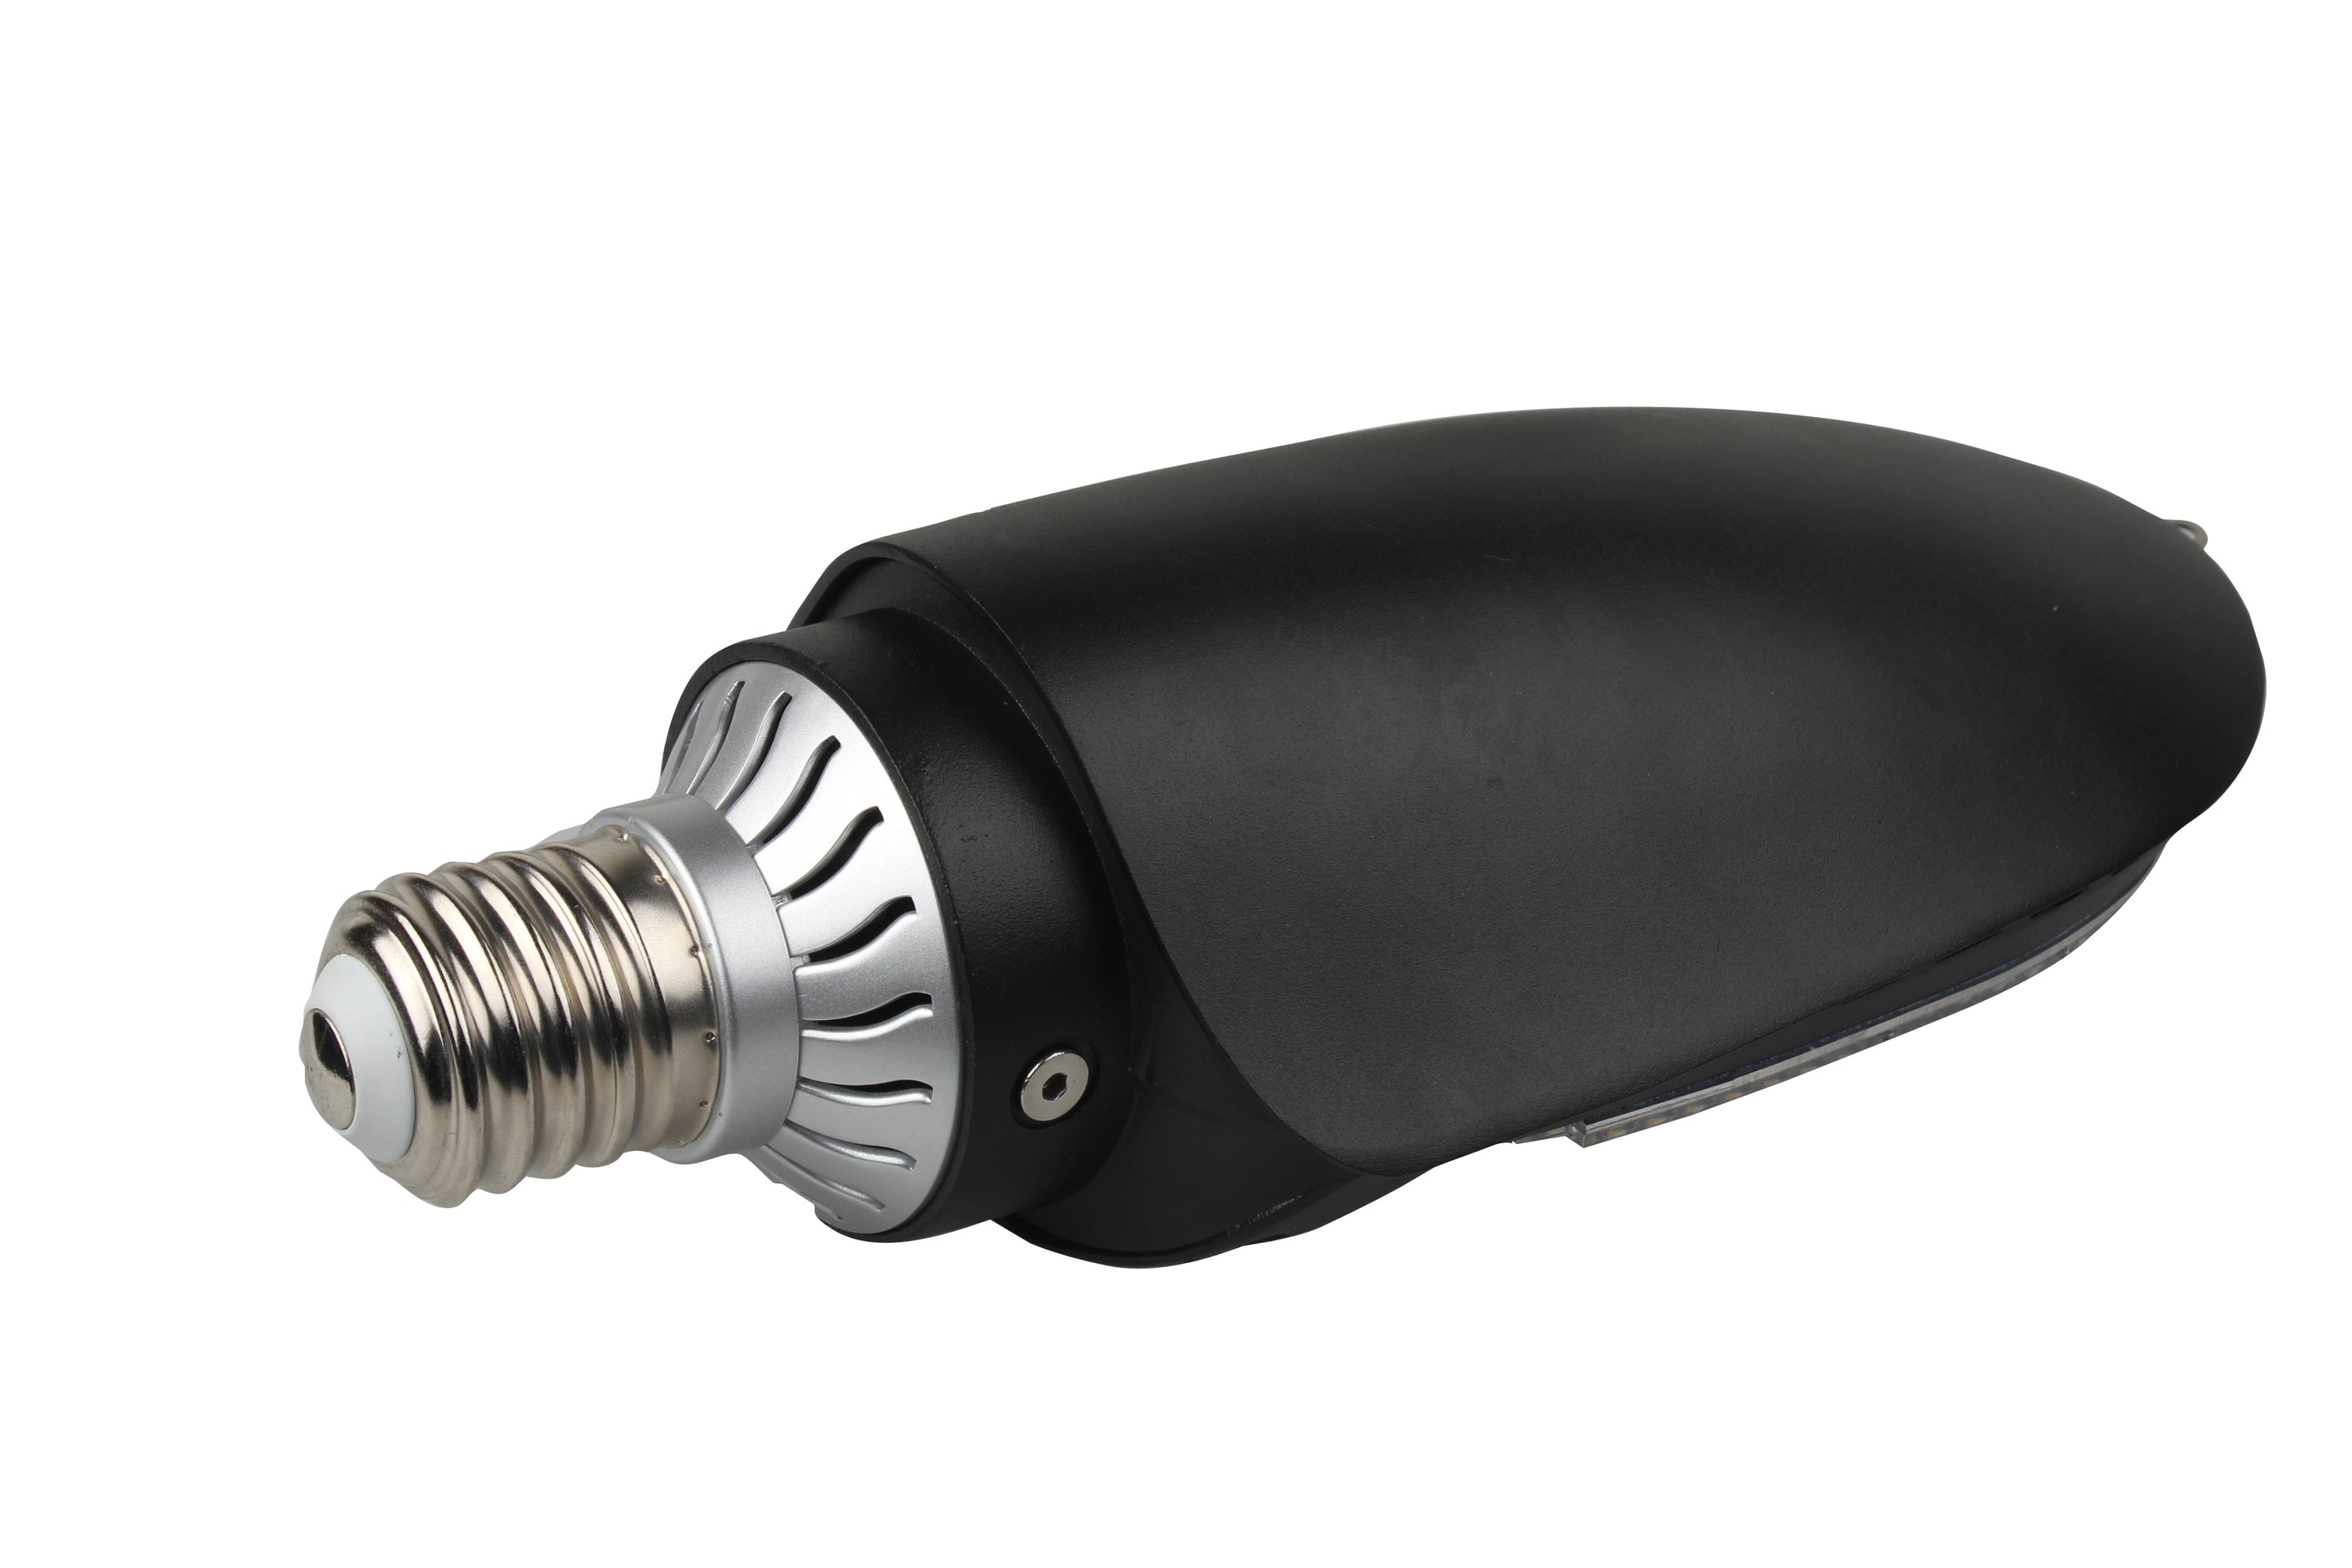 75 Watt LED Paddle Corn Cob Light Bulb - Area Flood Light, Wall Pack Replacement Bulb